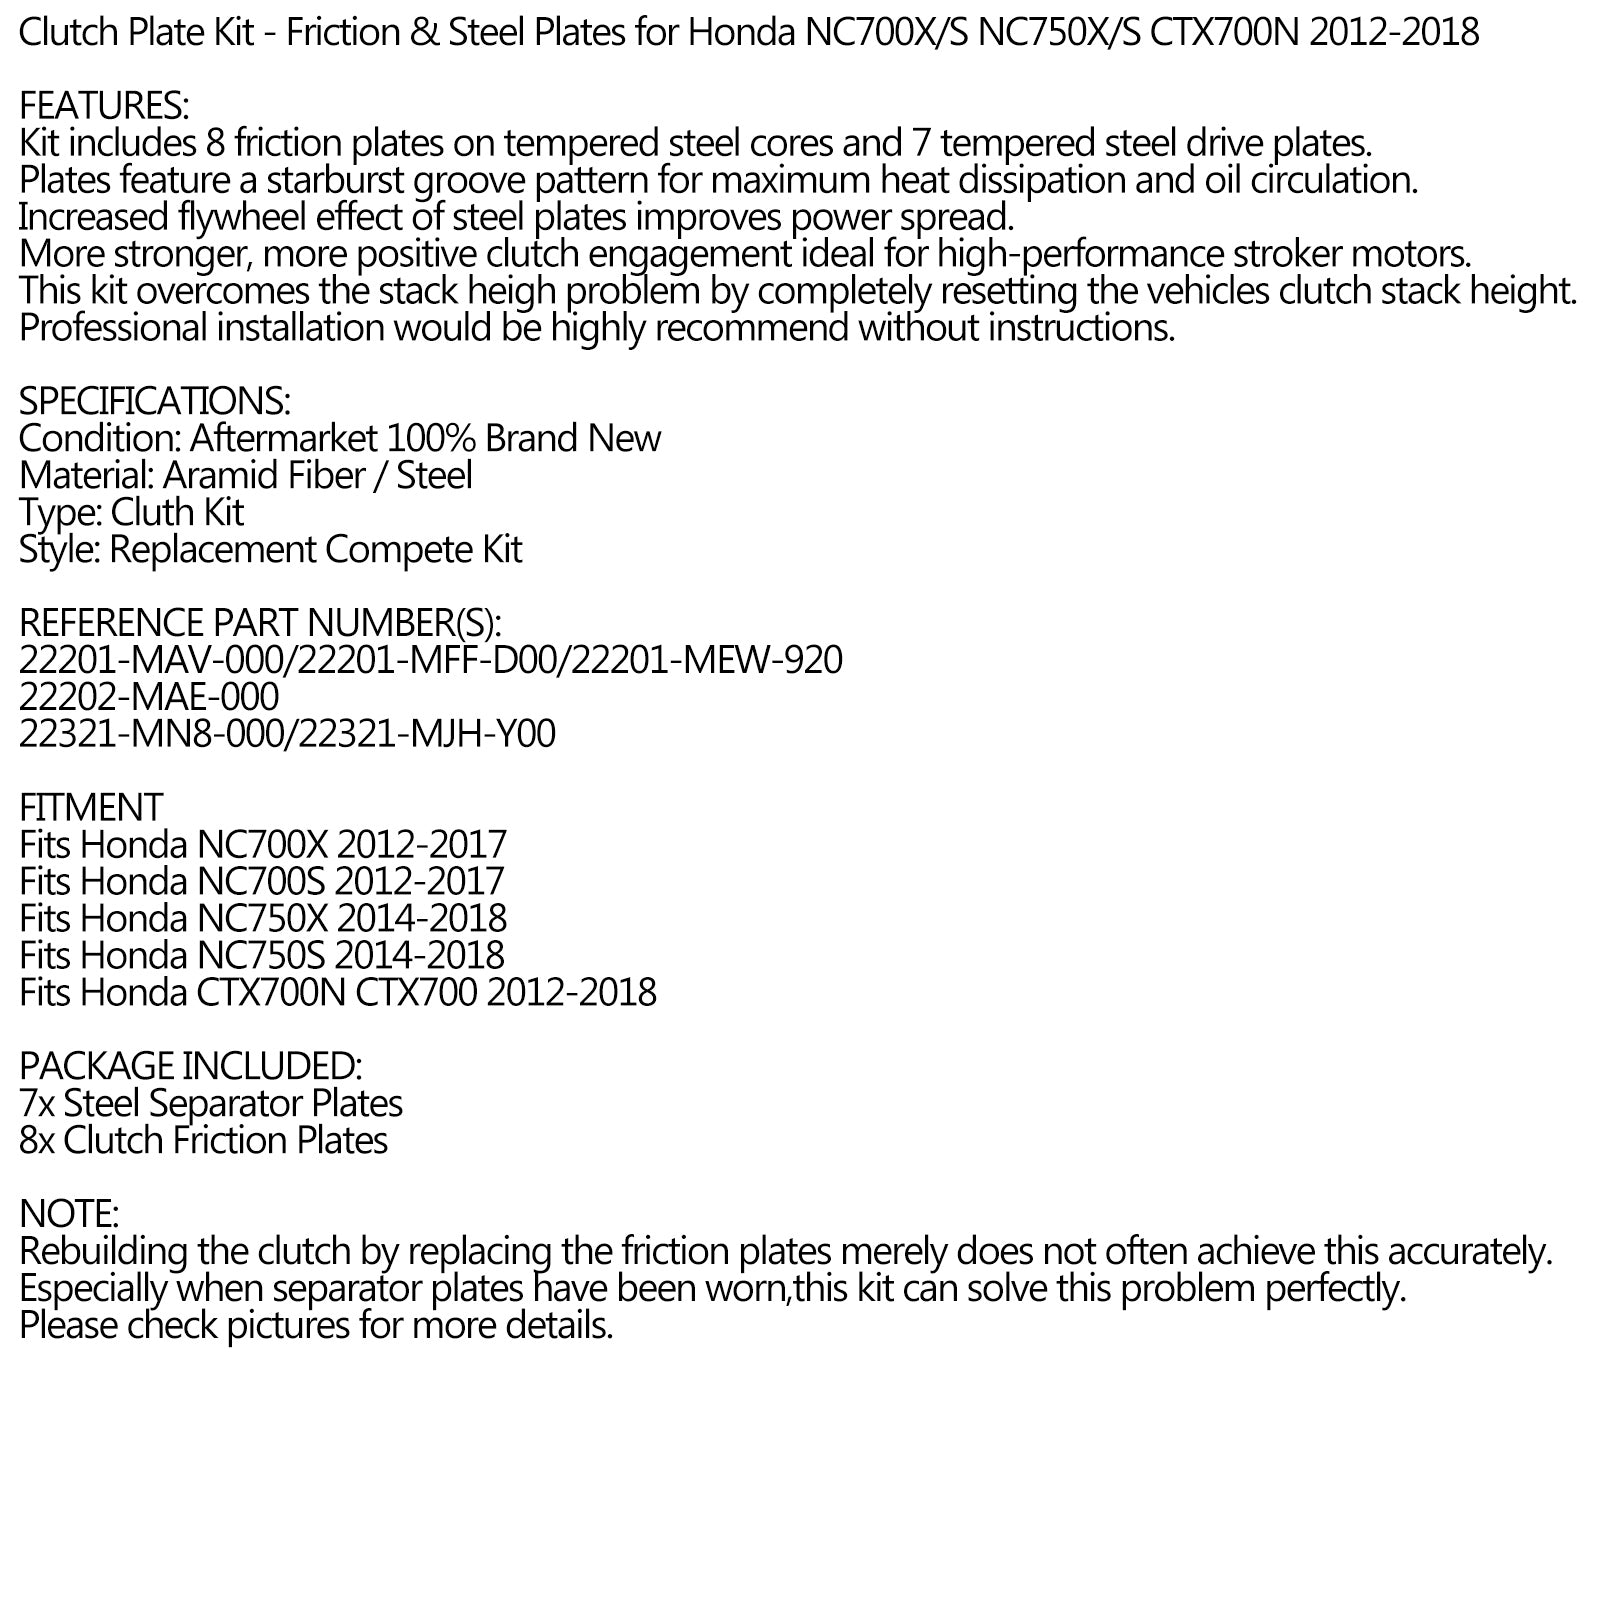 Clutch Kit Steel & Friction Plates for Honda NC700X/S NC750X/S CTX700N 2012-2018